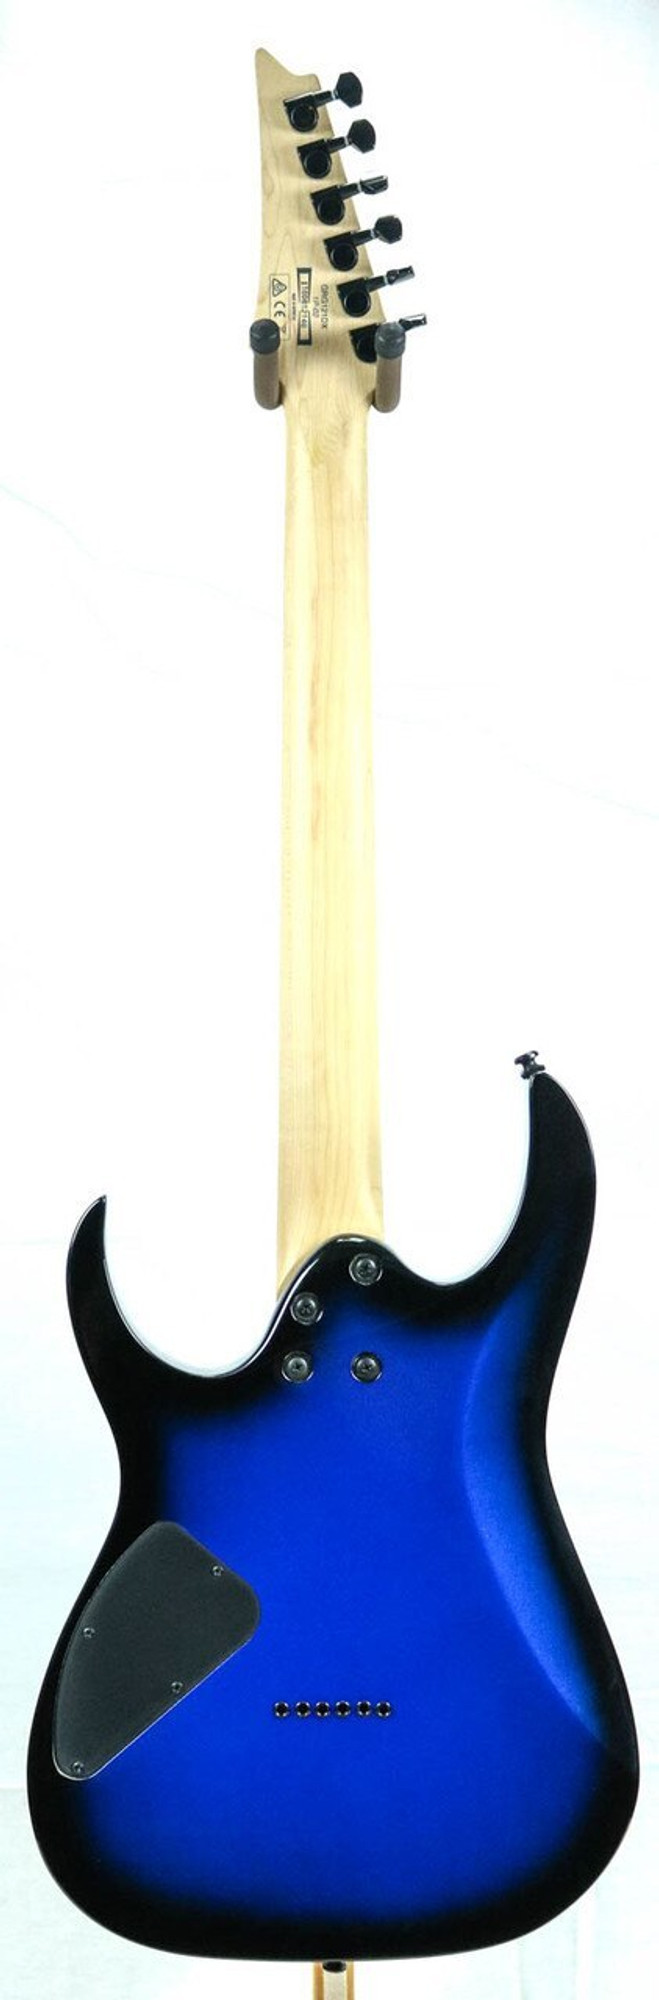 Ibanez Ibanez GRG121DX-SLS Gio Series Electric Guitar Starlight Blue